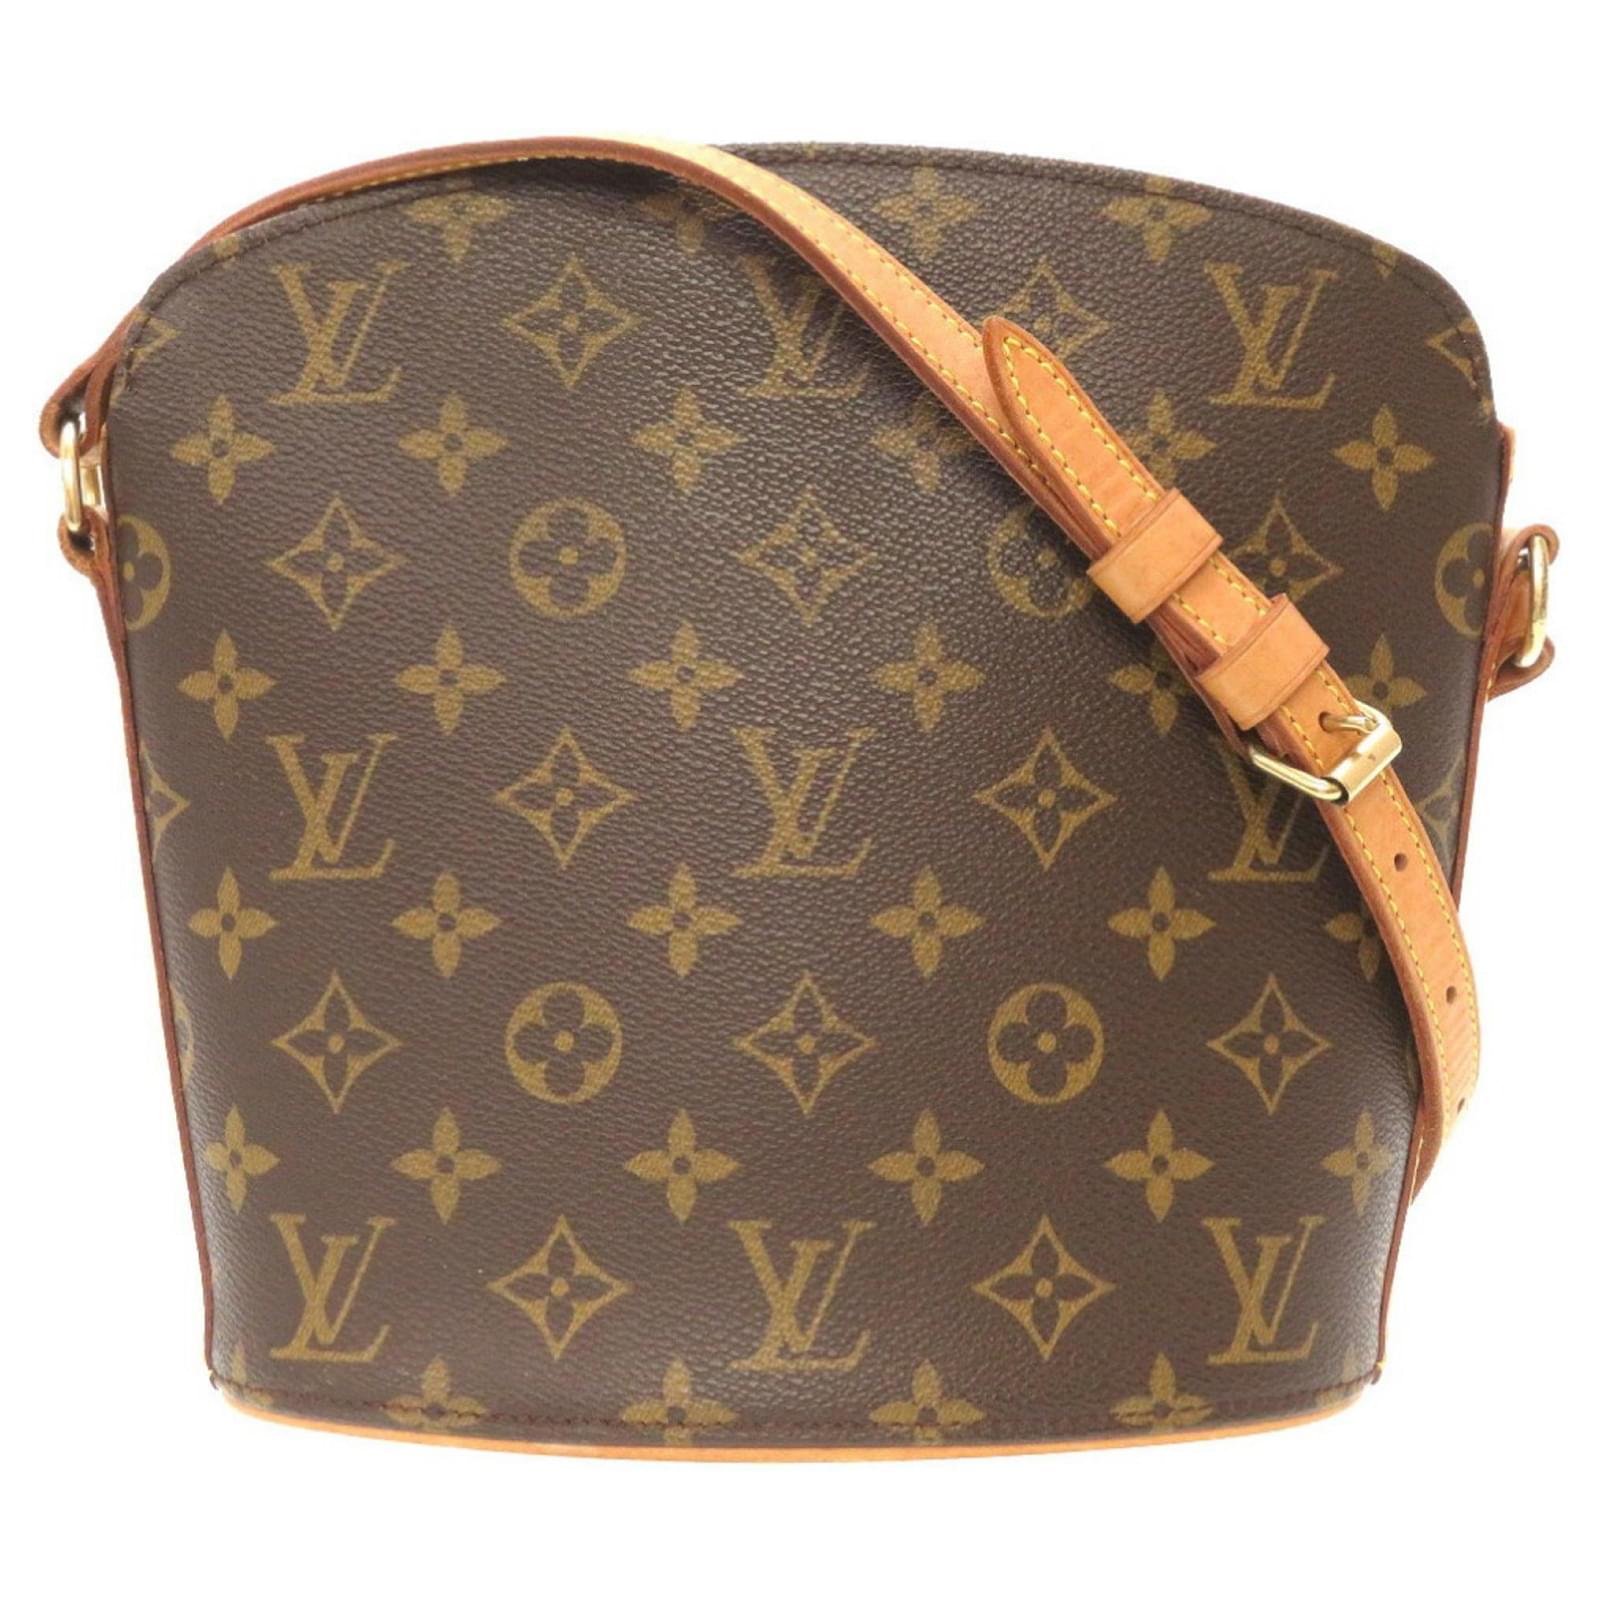 Louis Vuitton Drouot Monogram Crossbody Bag - Louis Vuitton